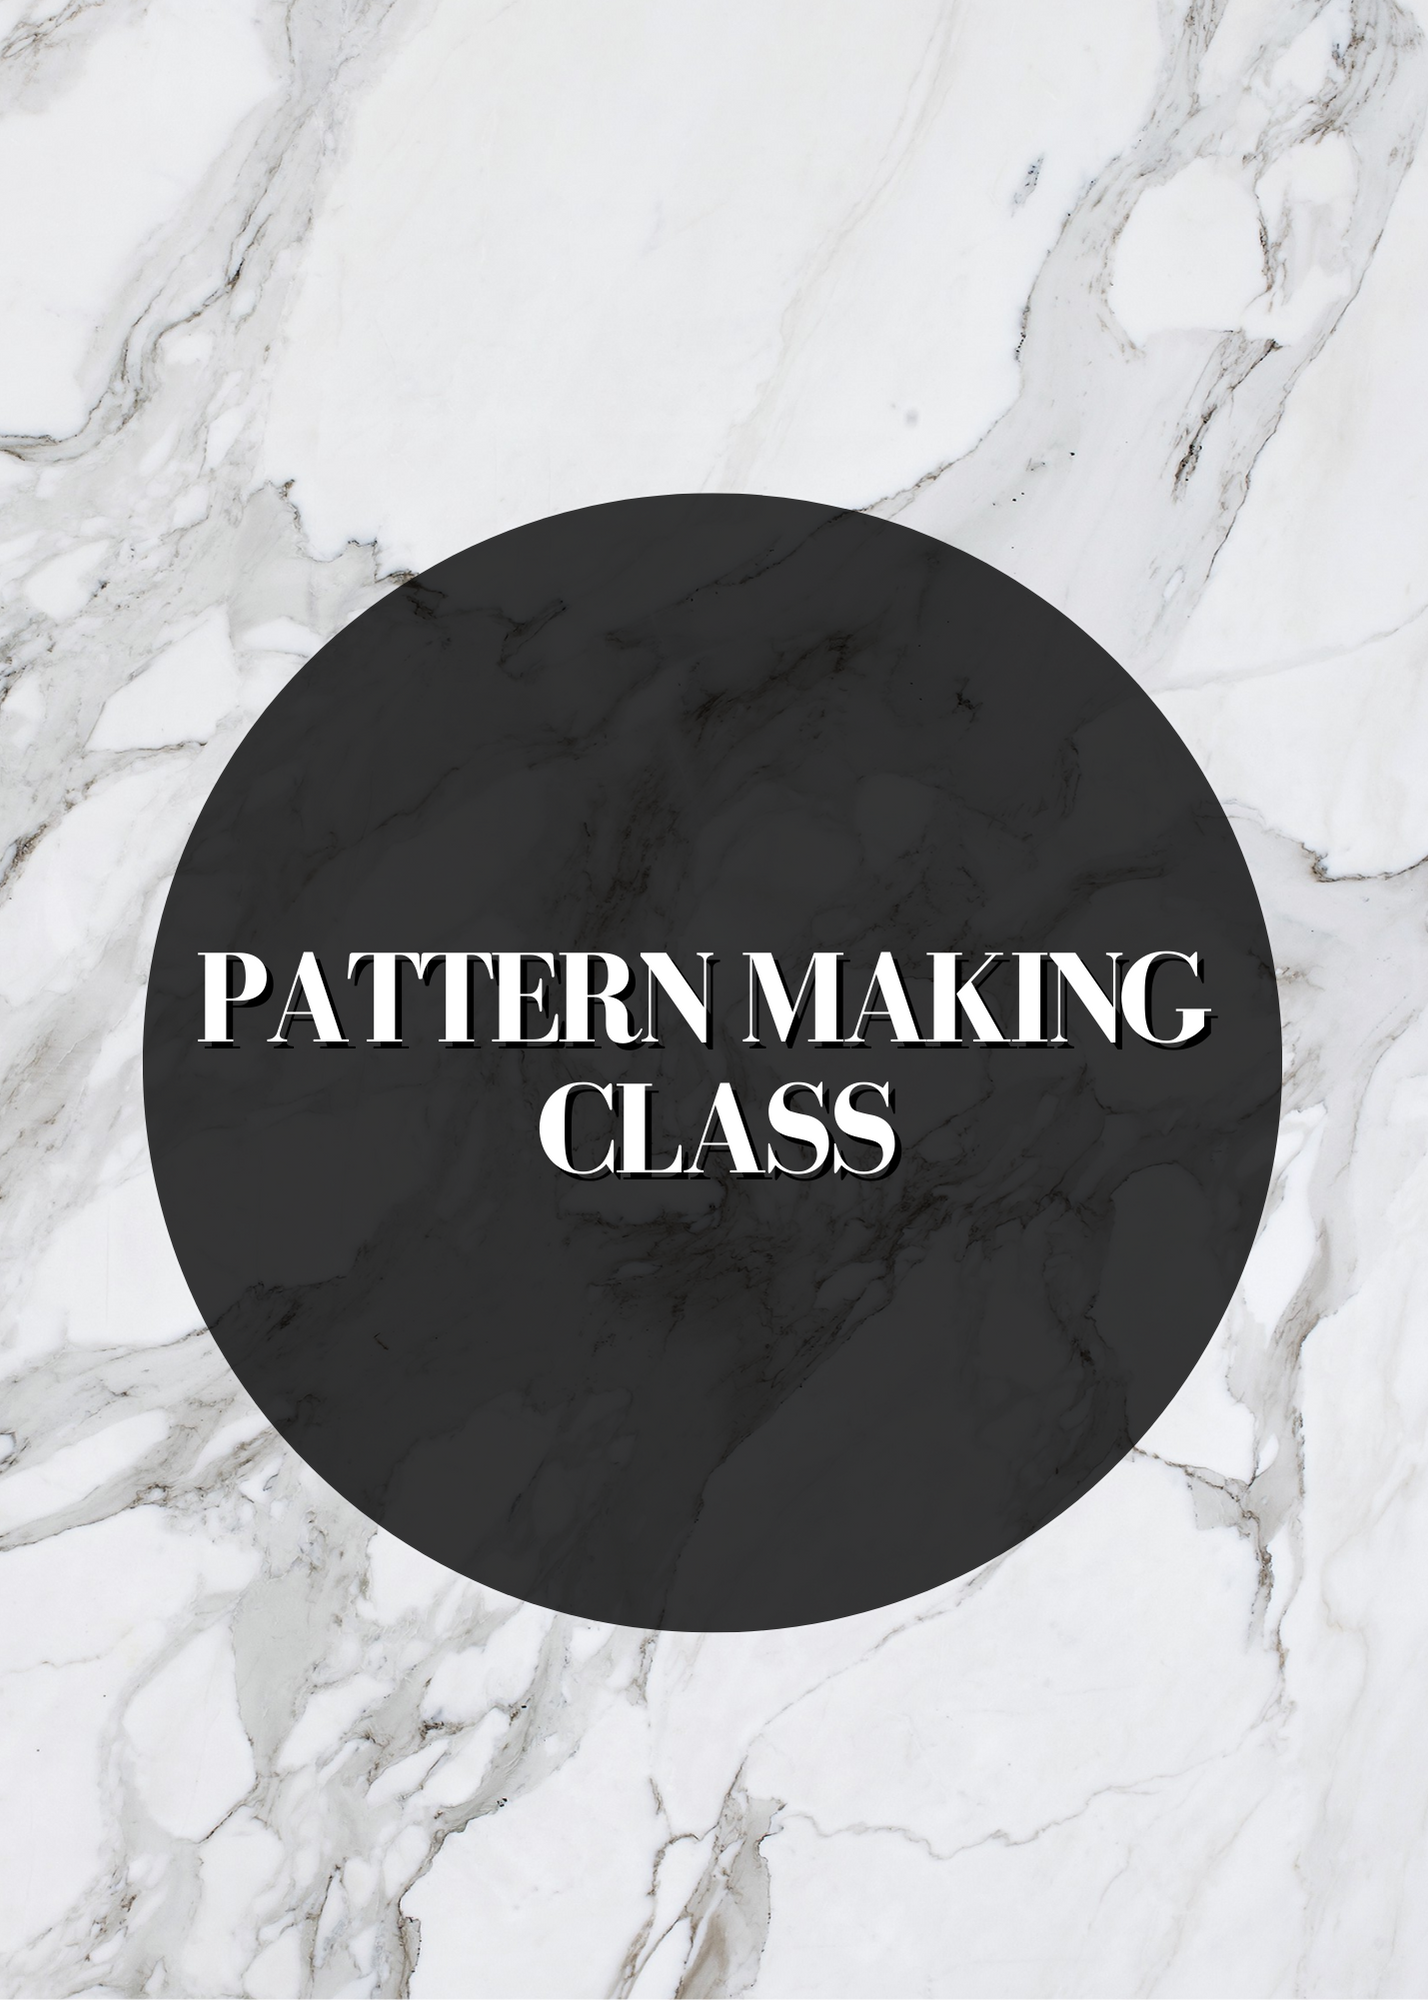 Patternmaking Classes